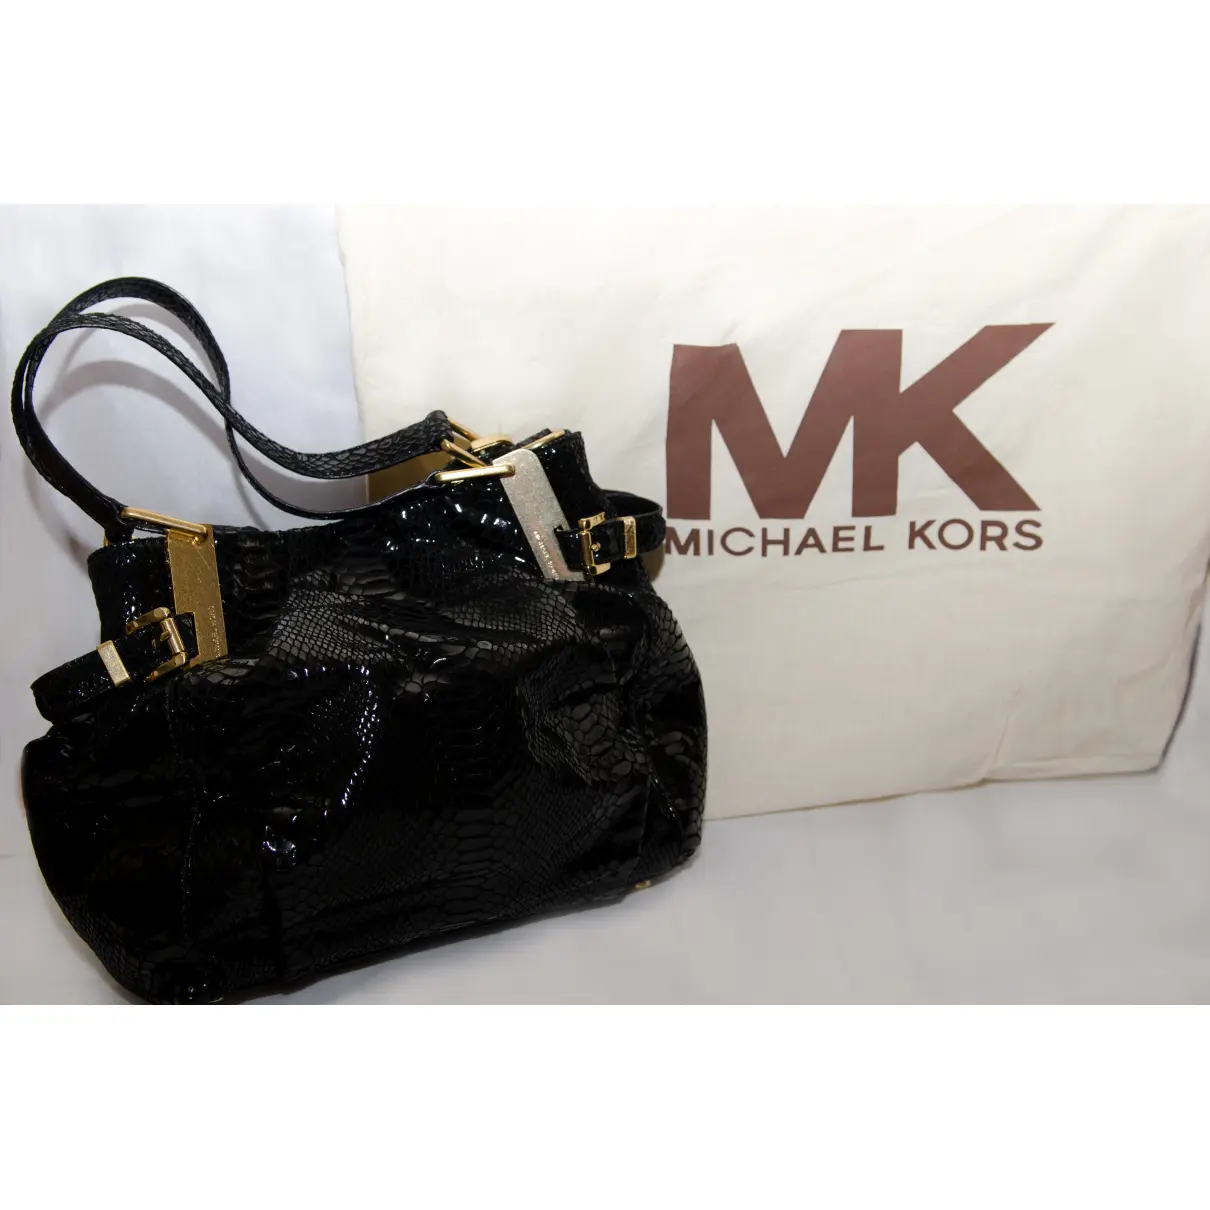 Bedford patent leather handbag Michael Kors